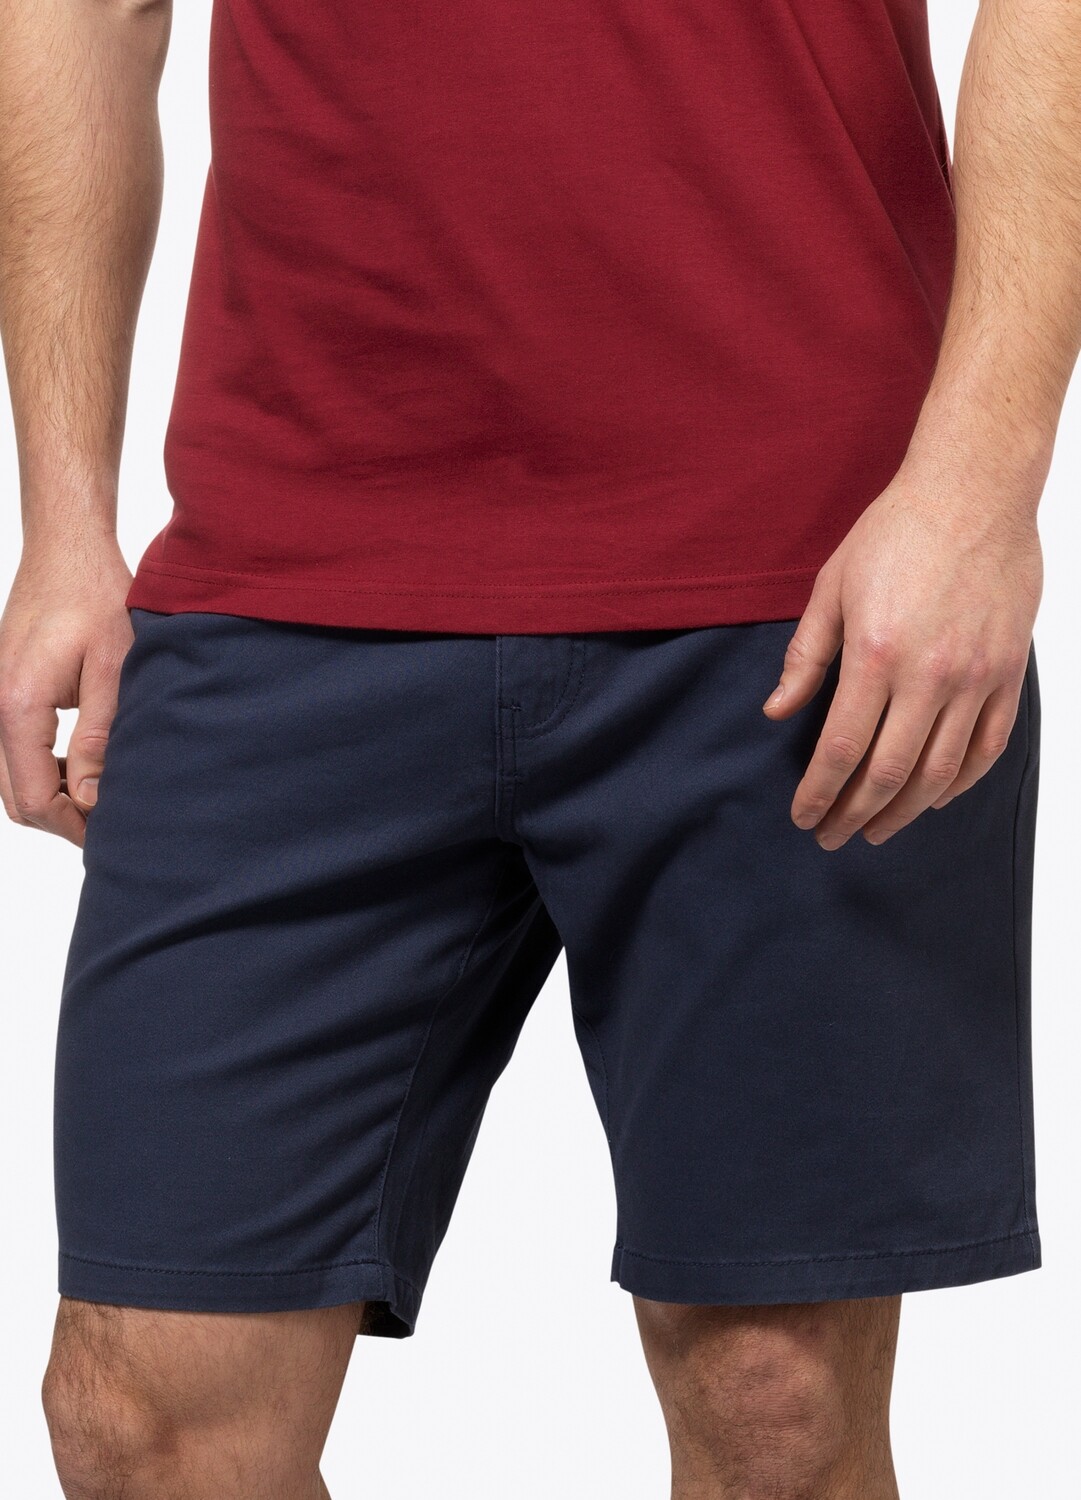 Men's Navy Emmett Shorts, Size: Small